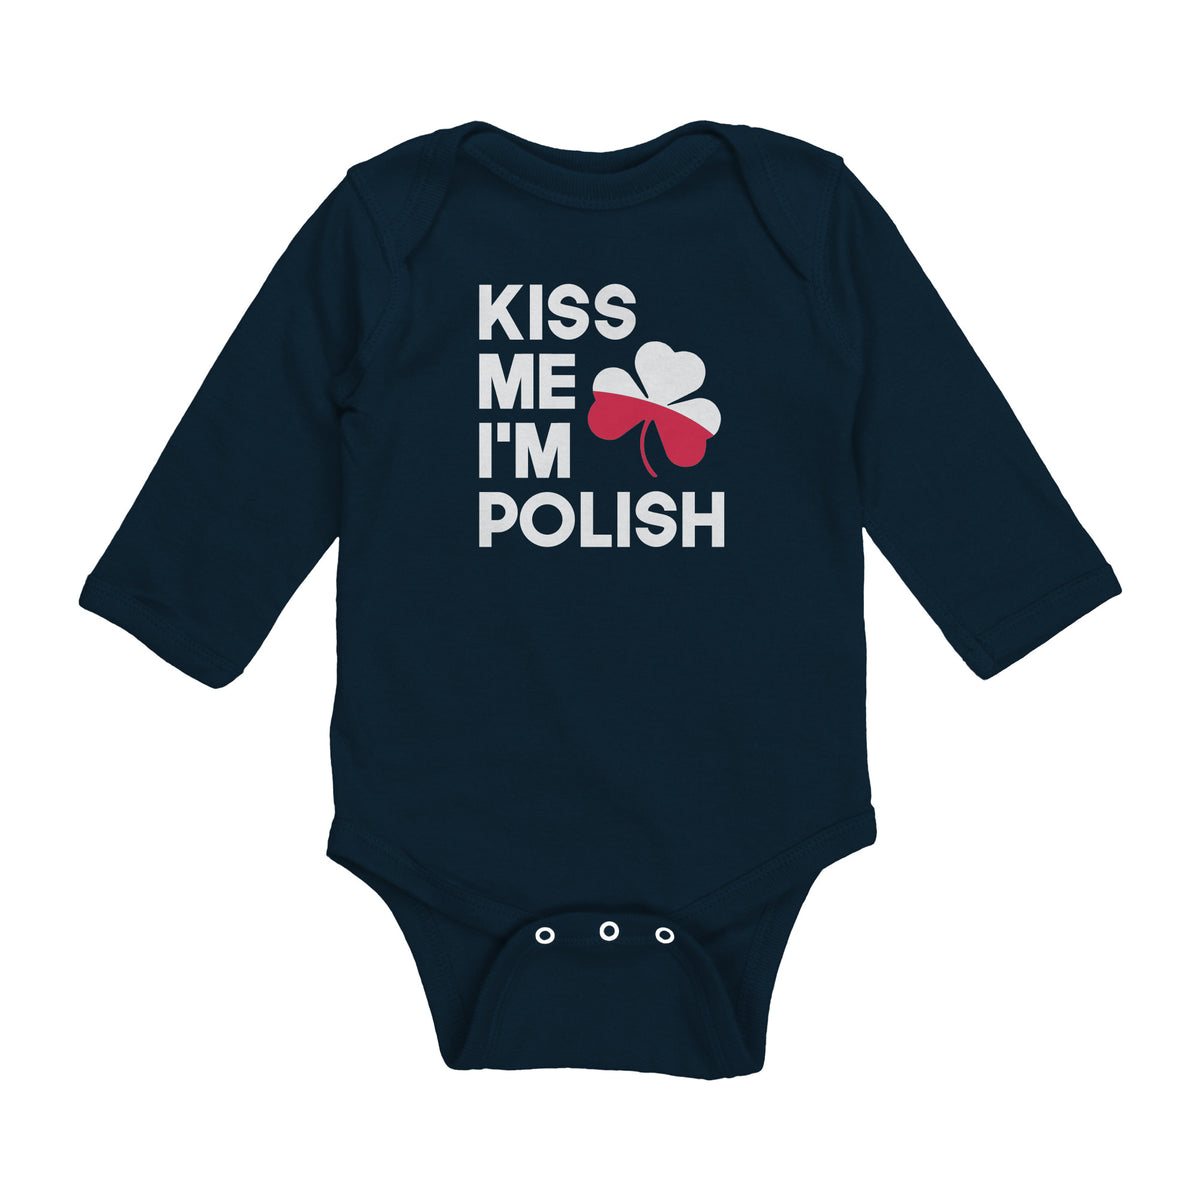 Kiss me I'm polish baby bodysuit long sleeve – My Polish Heritage